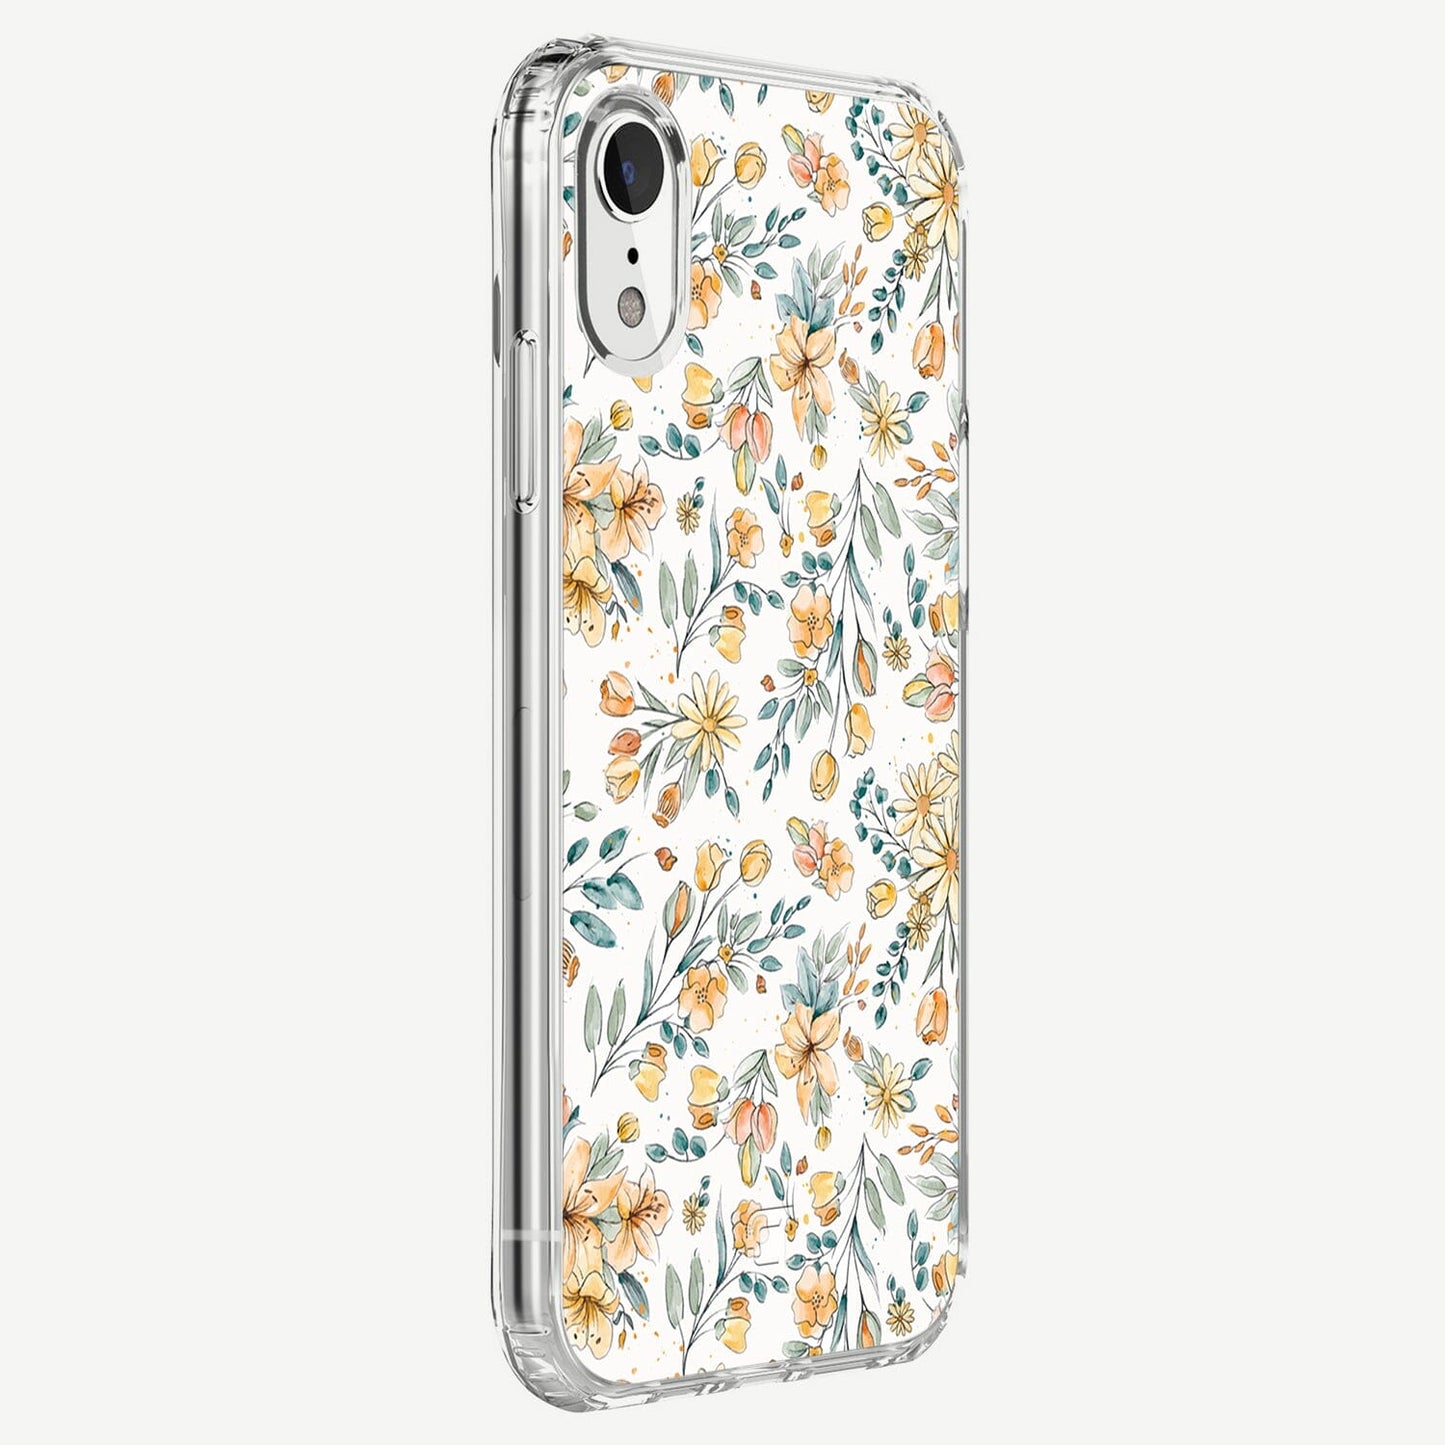 iPhone XR Case - Kiki Floral Design